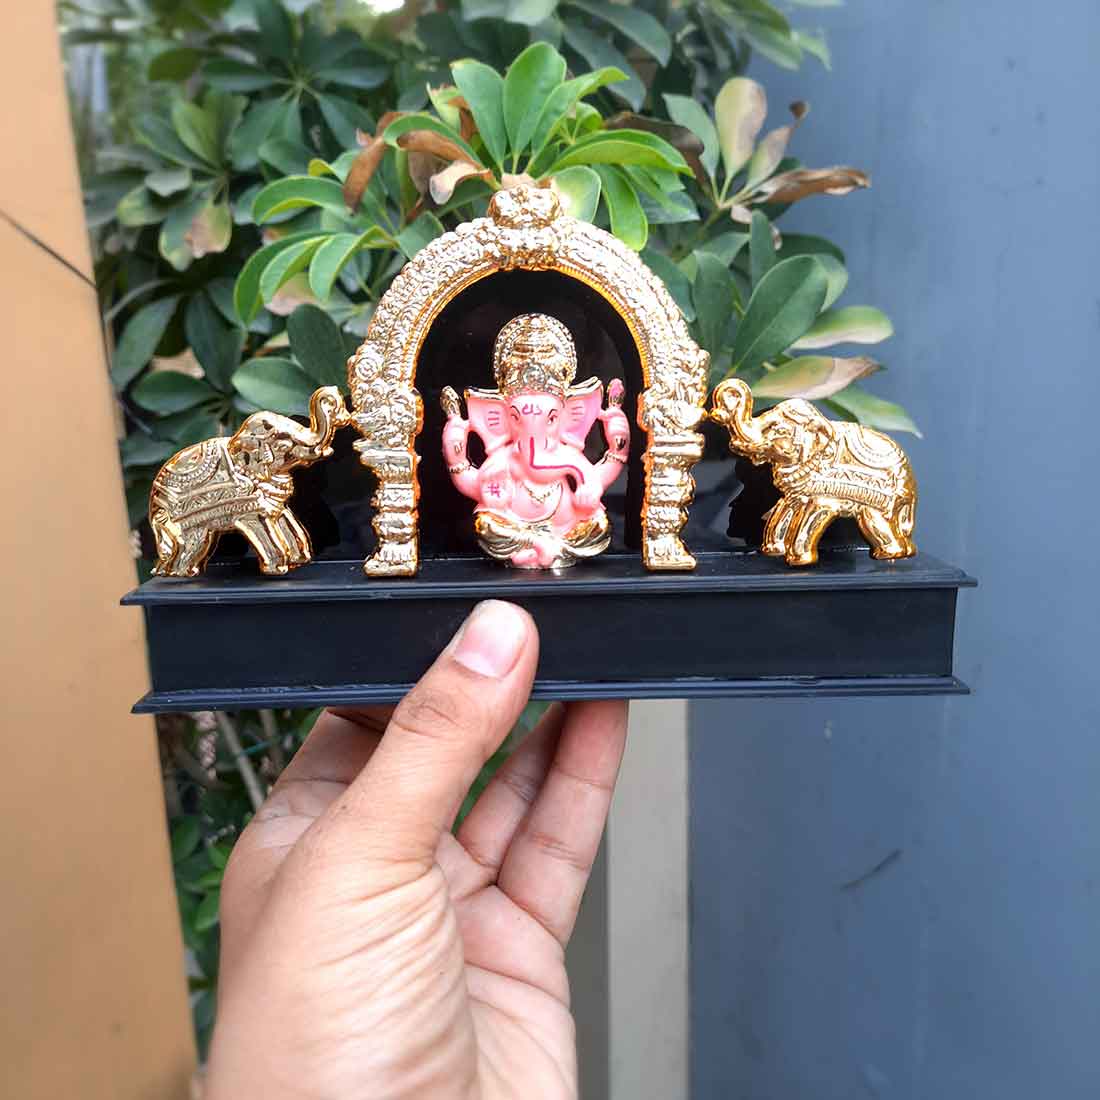 Ganesh Murti | Ganesh Idol for Car Dashboard - 4 Inch - ApkaMart